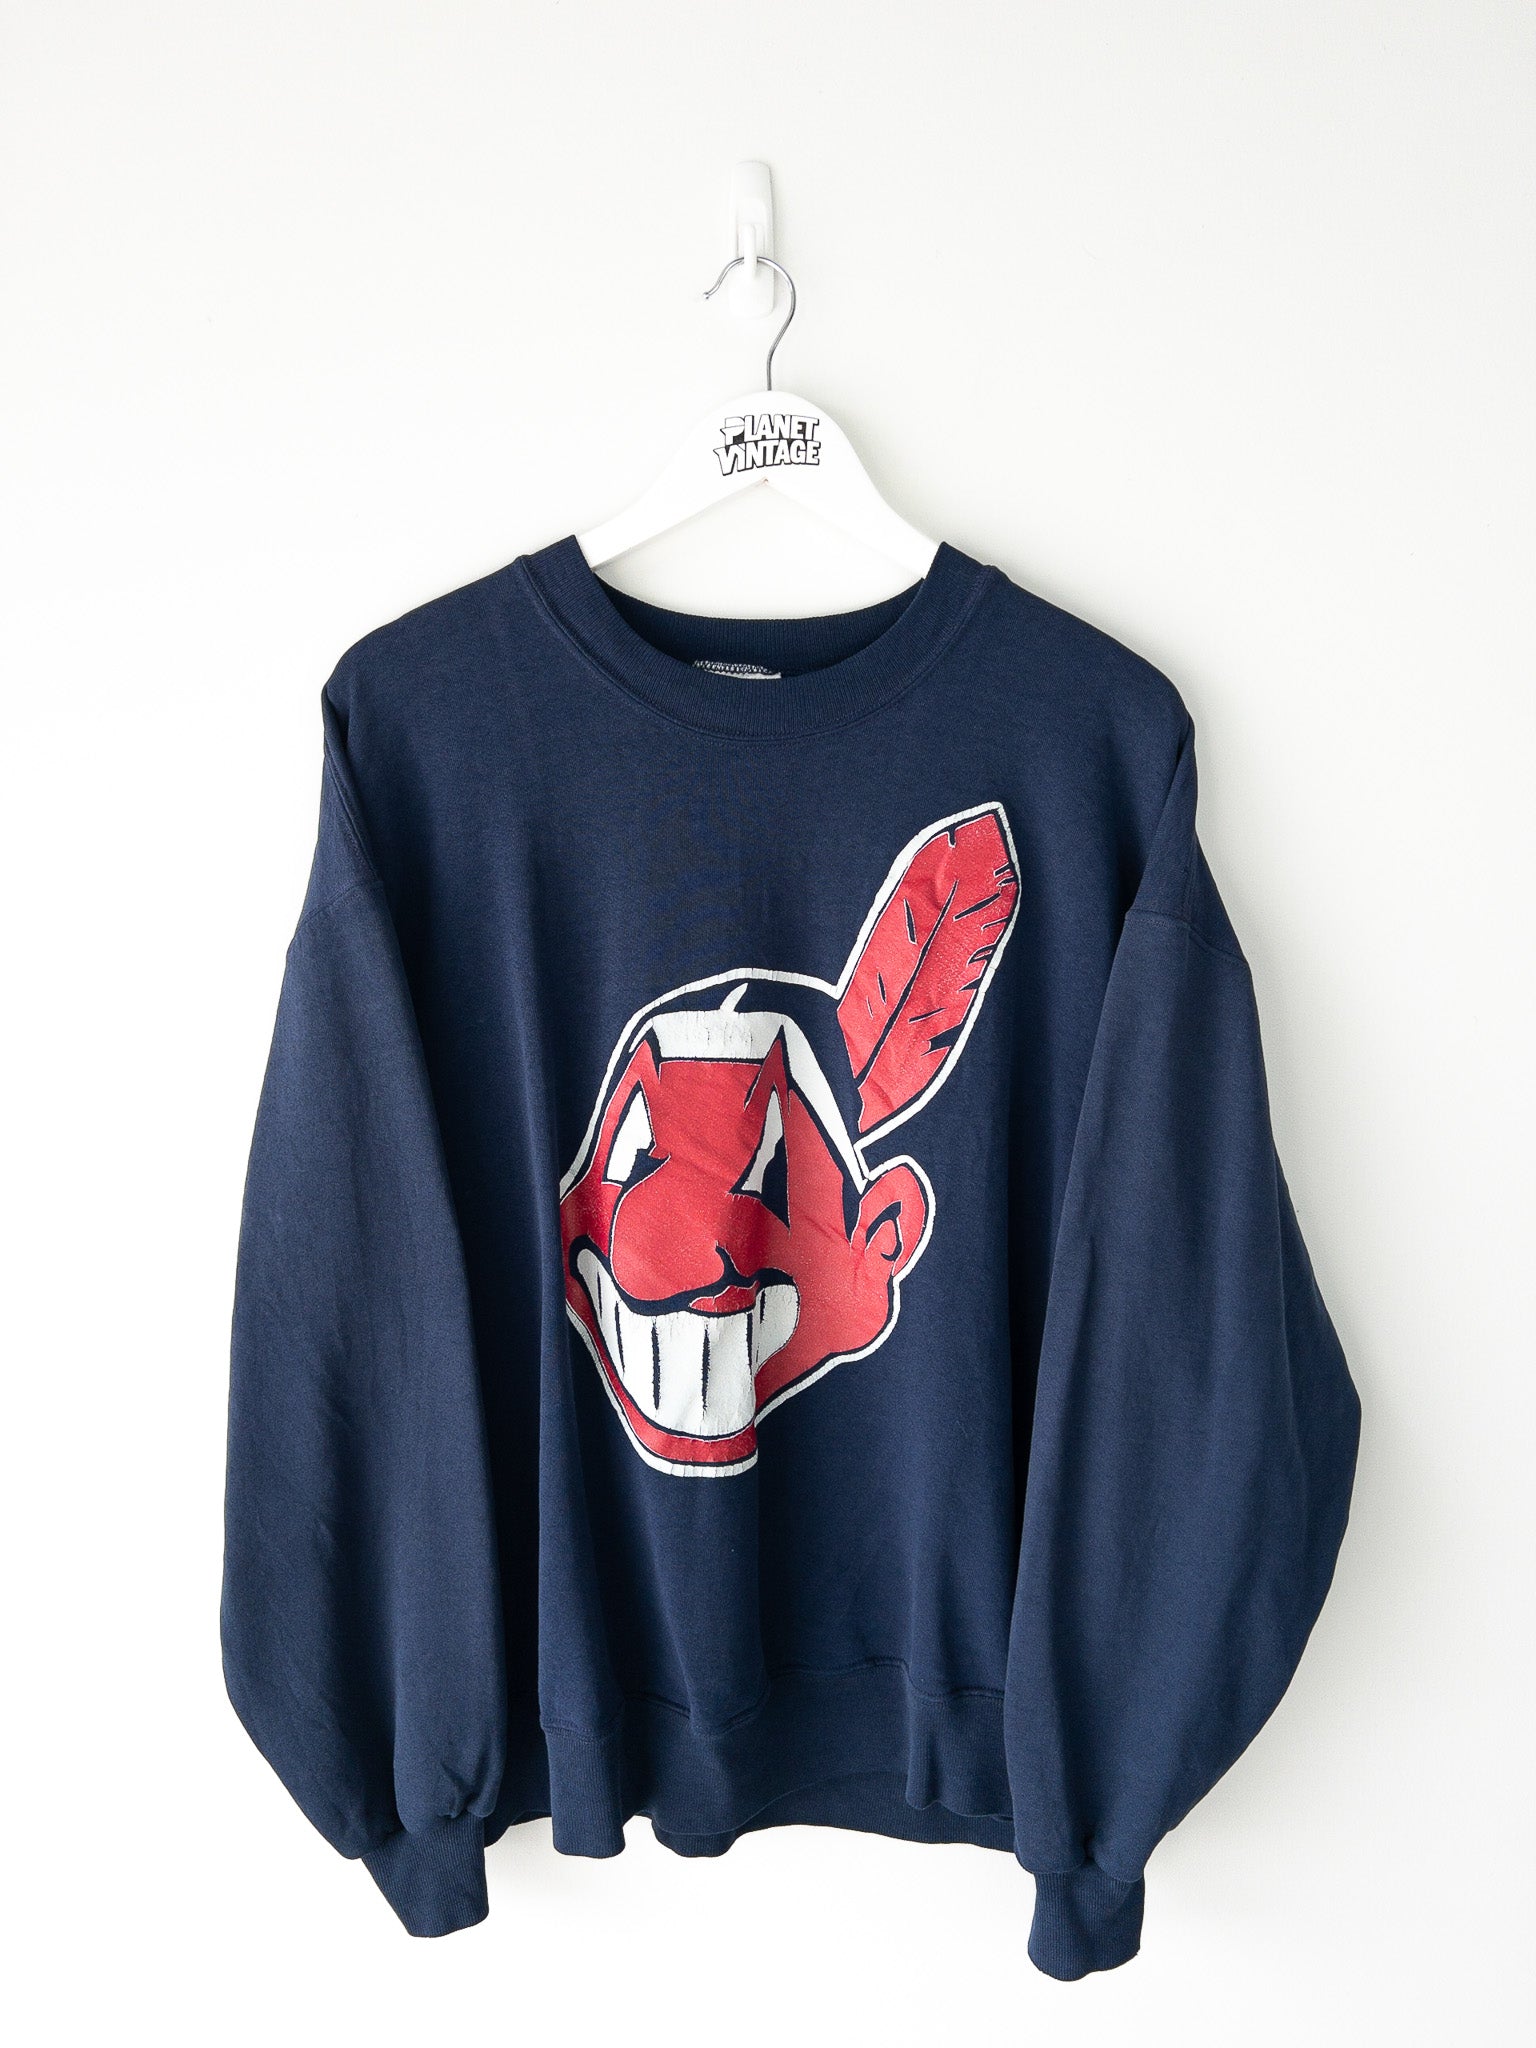 Vintage Cleveland Indians Sweatshirt (L)